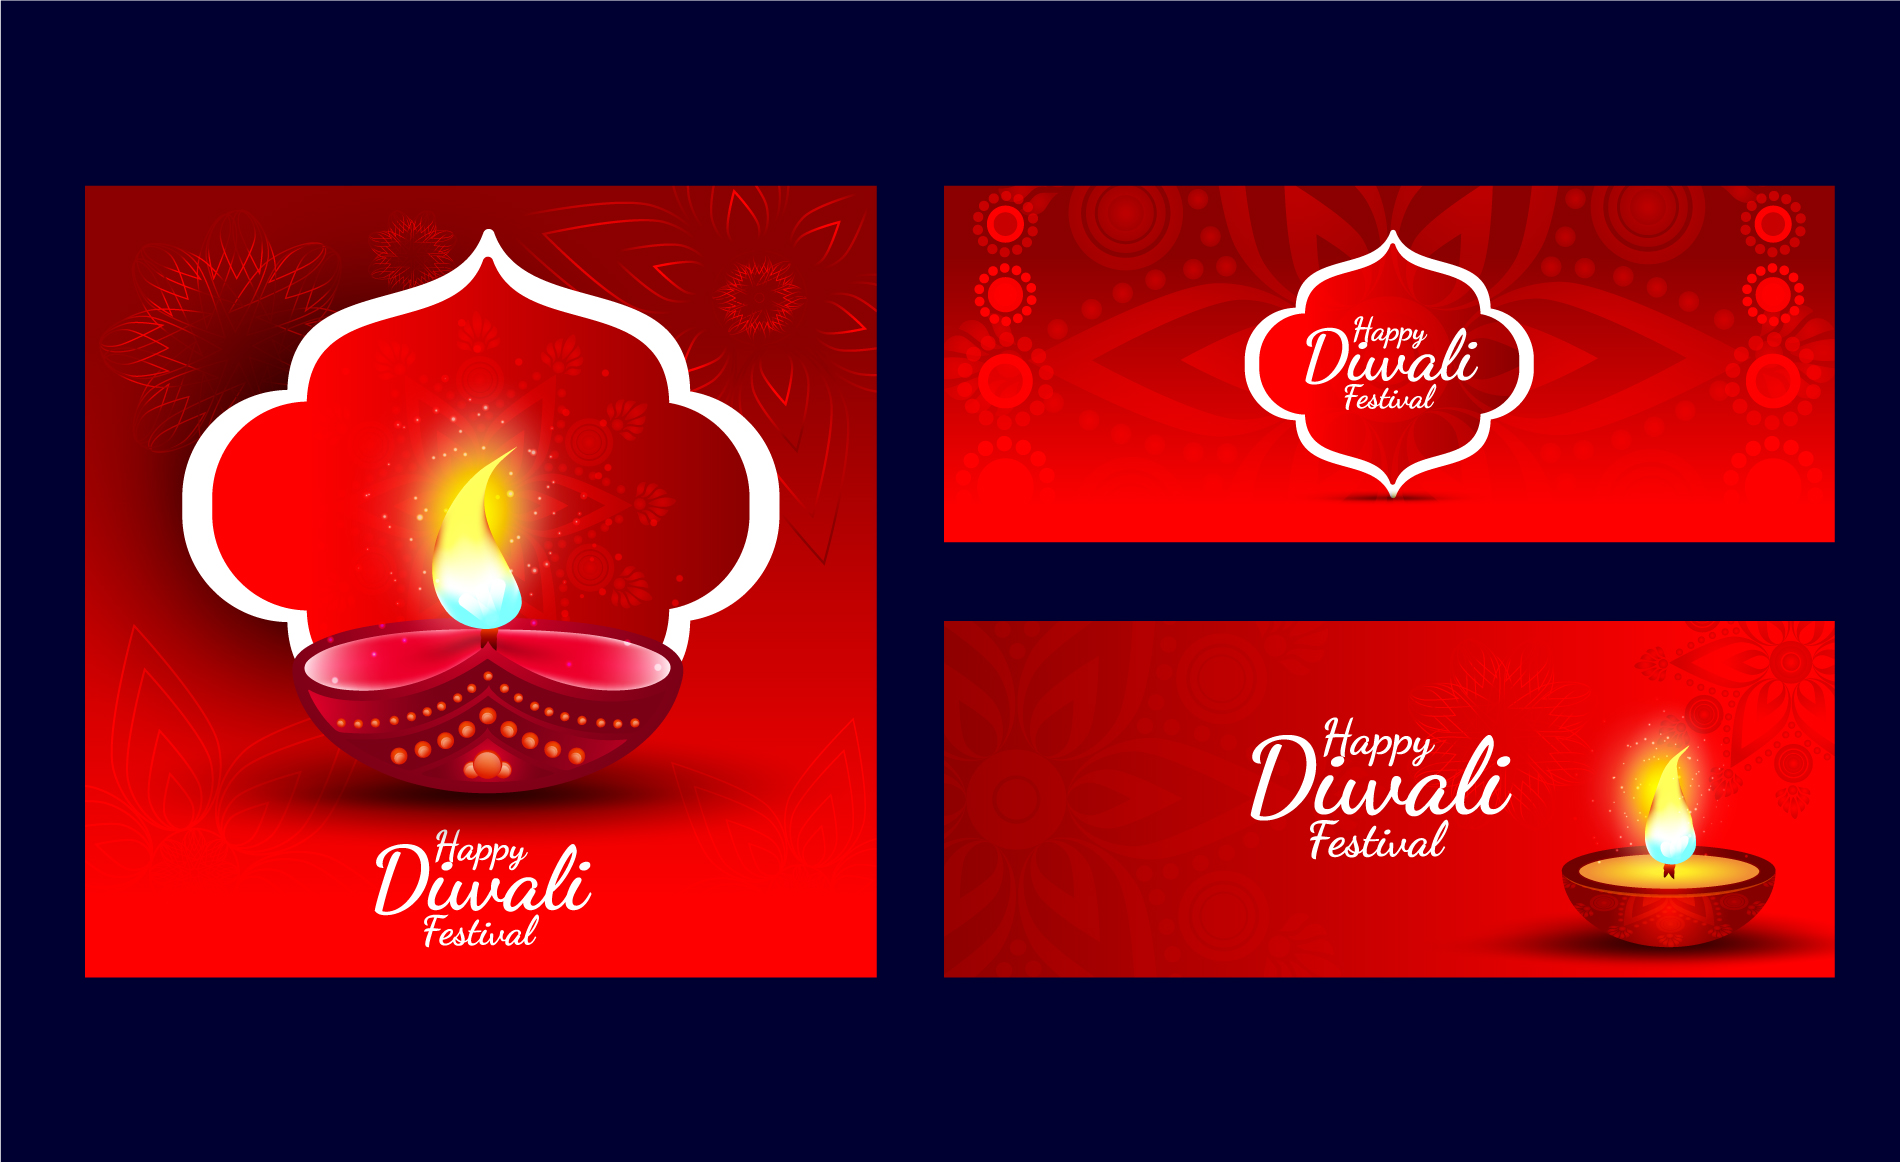 Diwali diwali festival card with a lit candle.